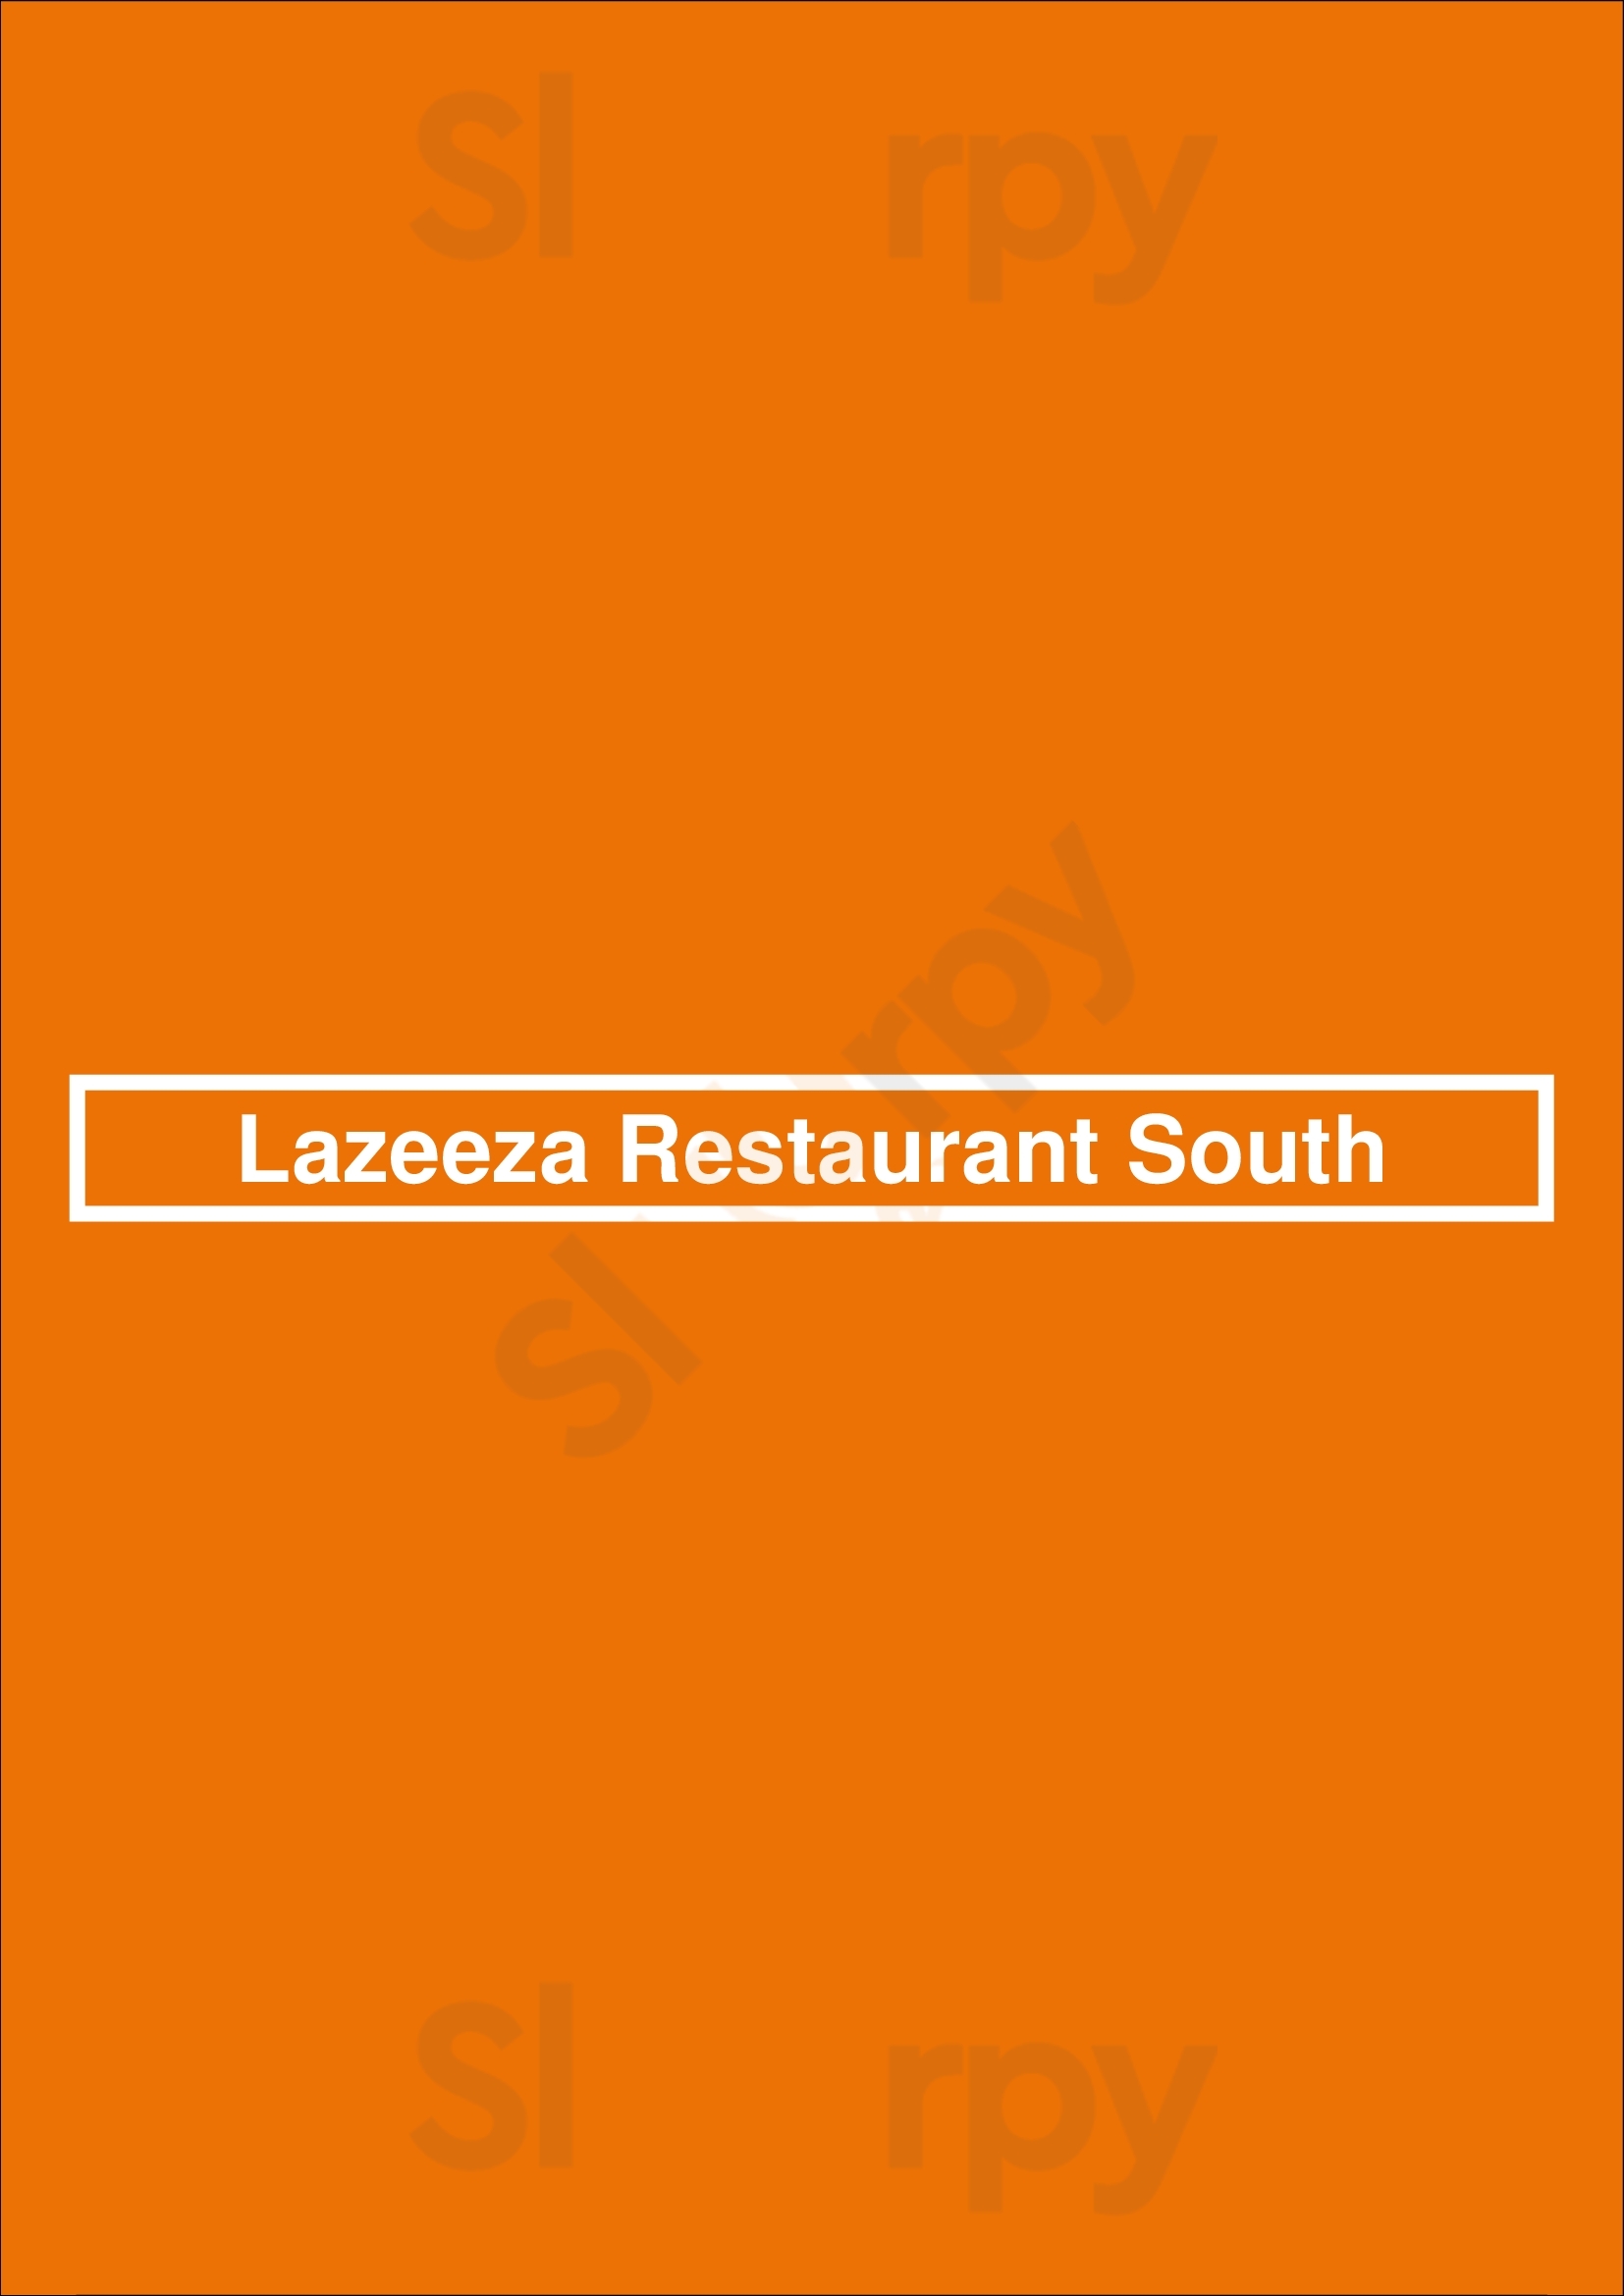 Lazeeza Restaurant South Houston Menu - 1